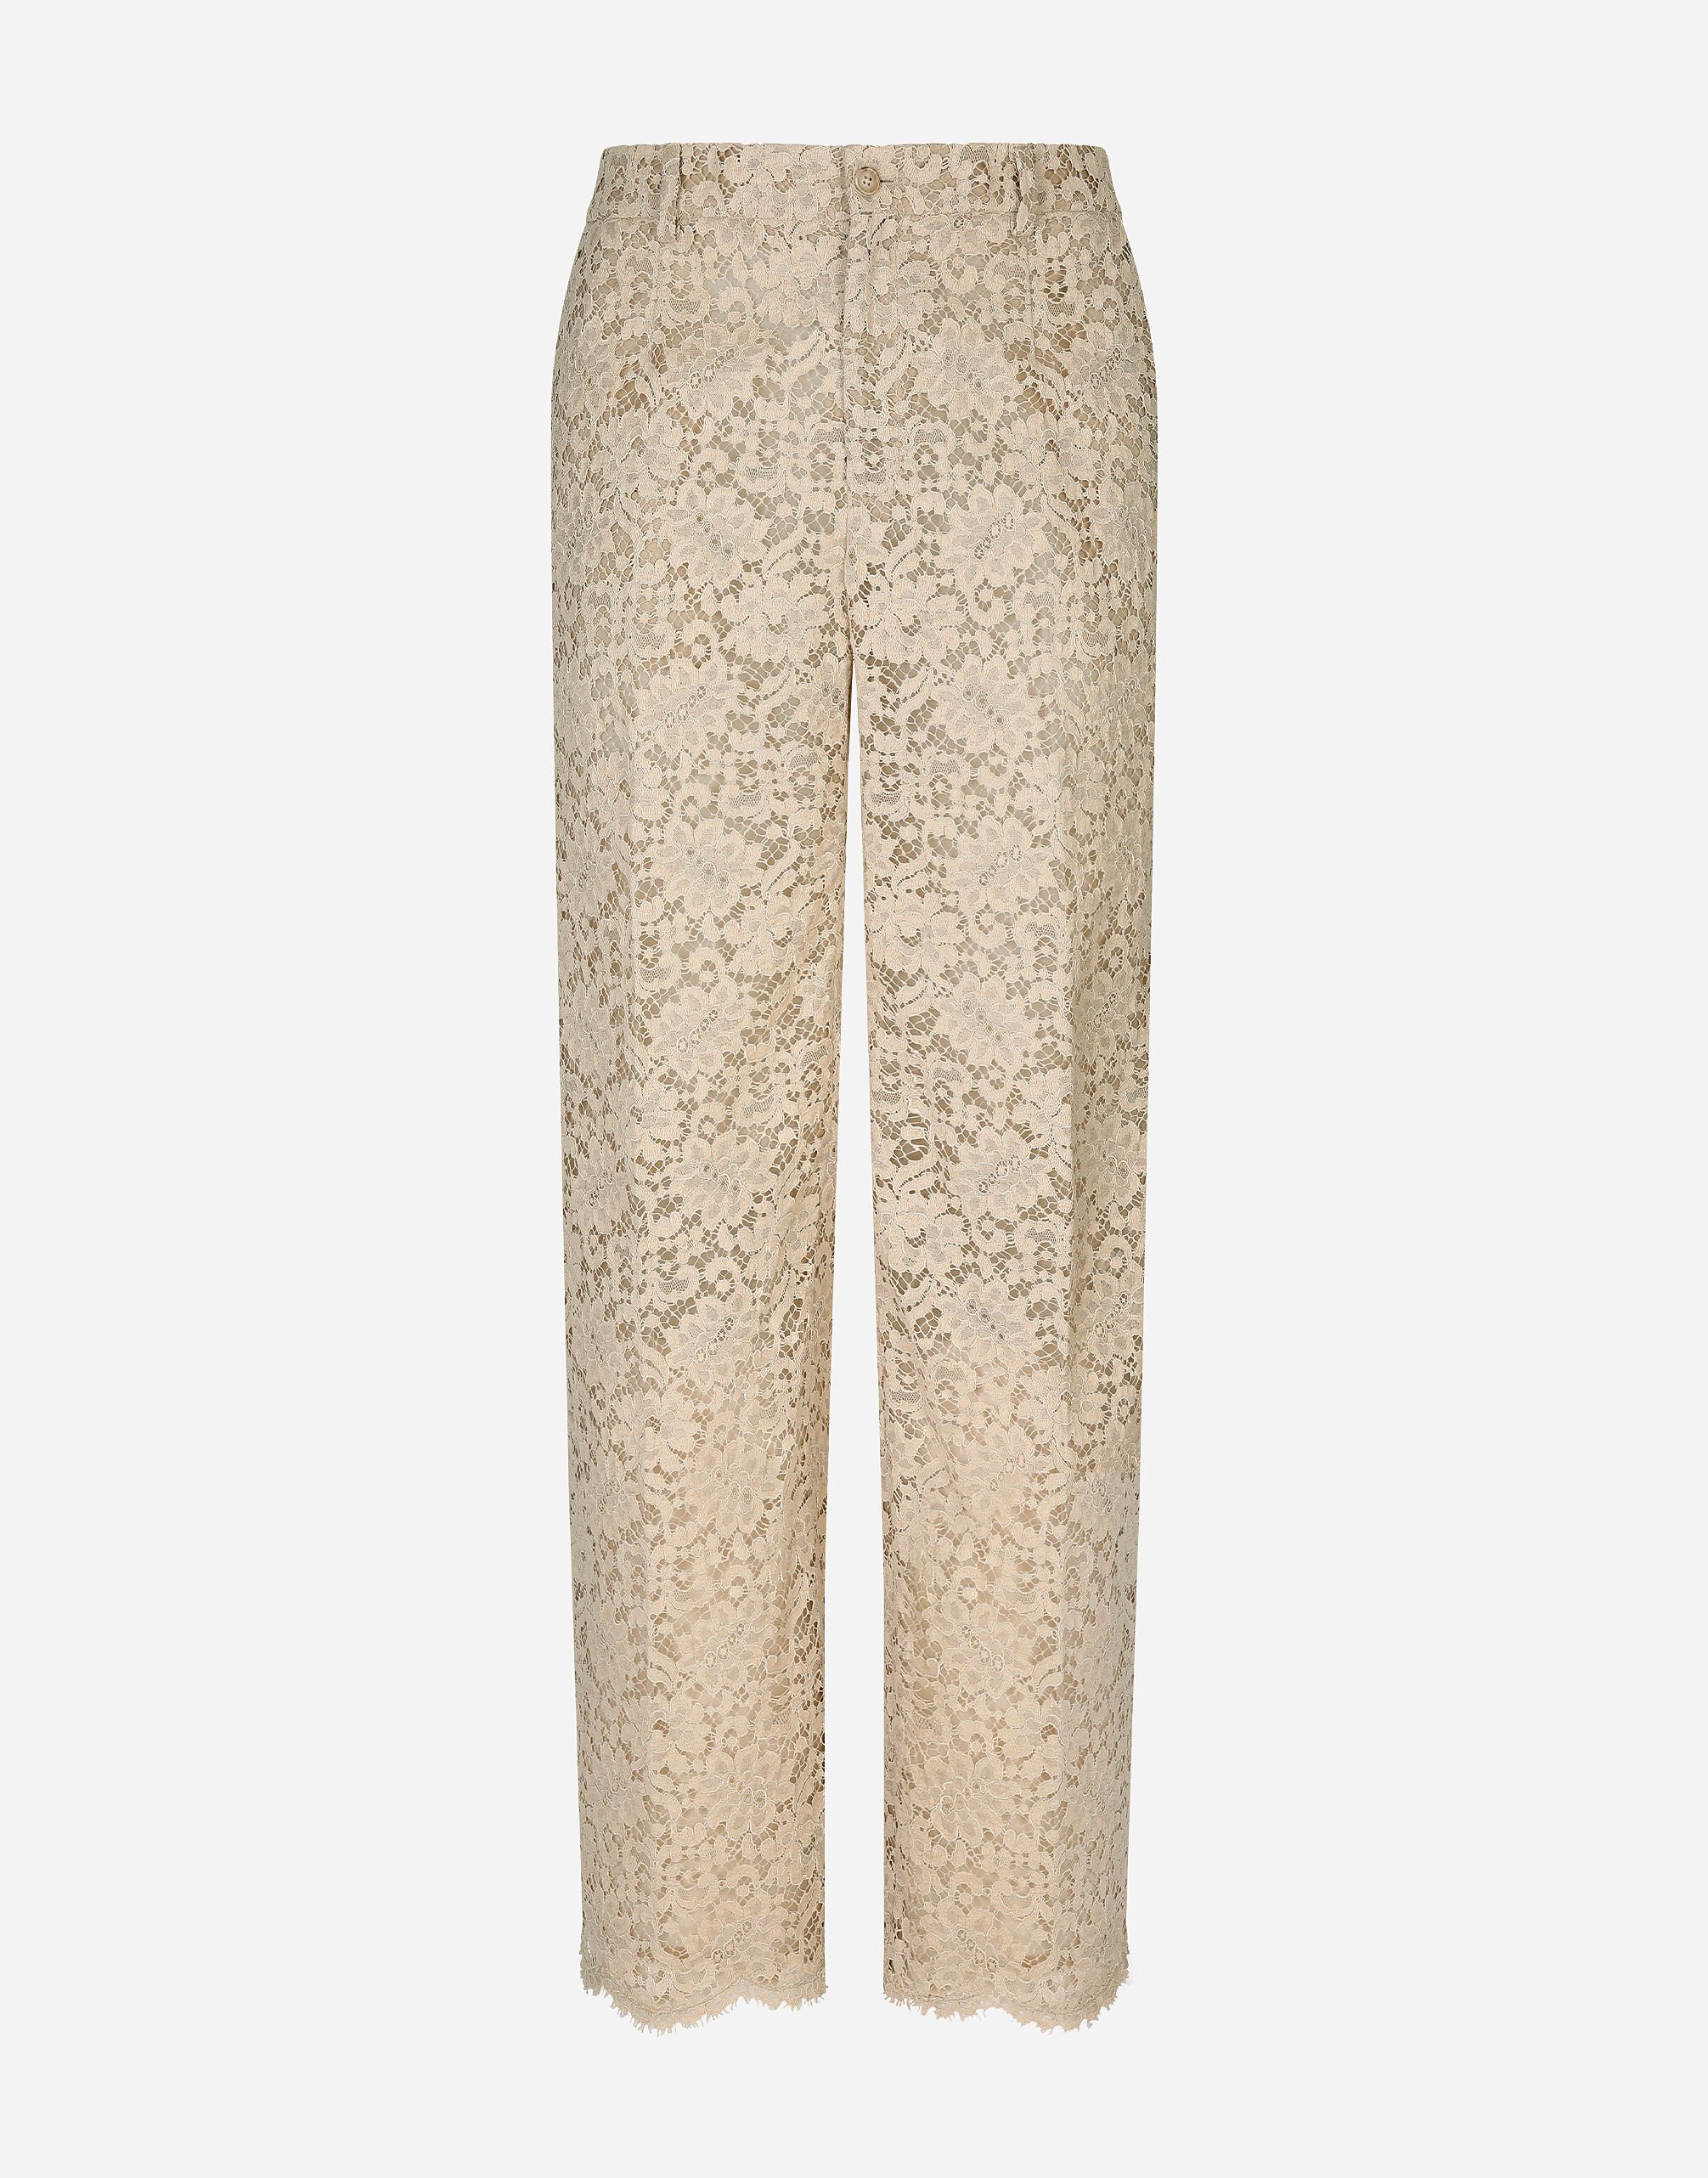 Dolce & Gabbana Cordonetto lace pants Multicolor GY6UETFR4BP